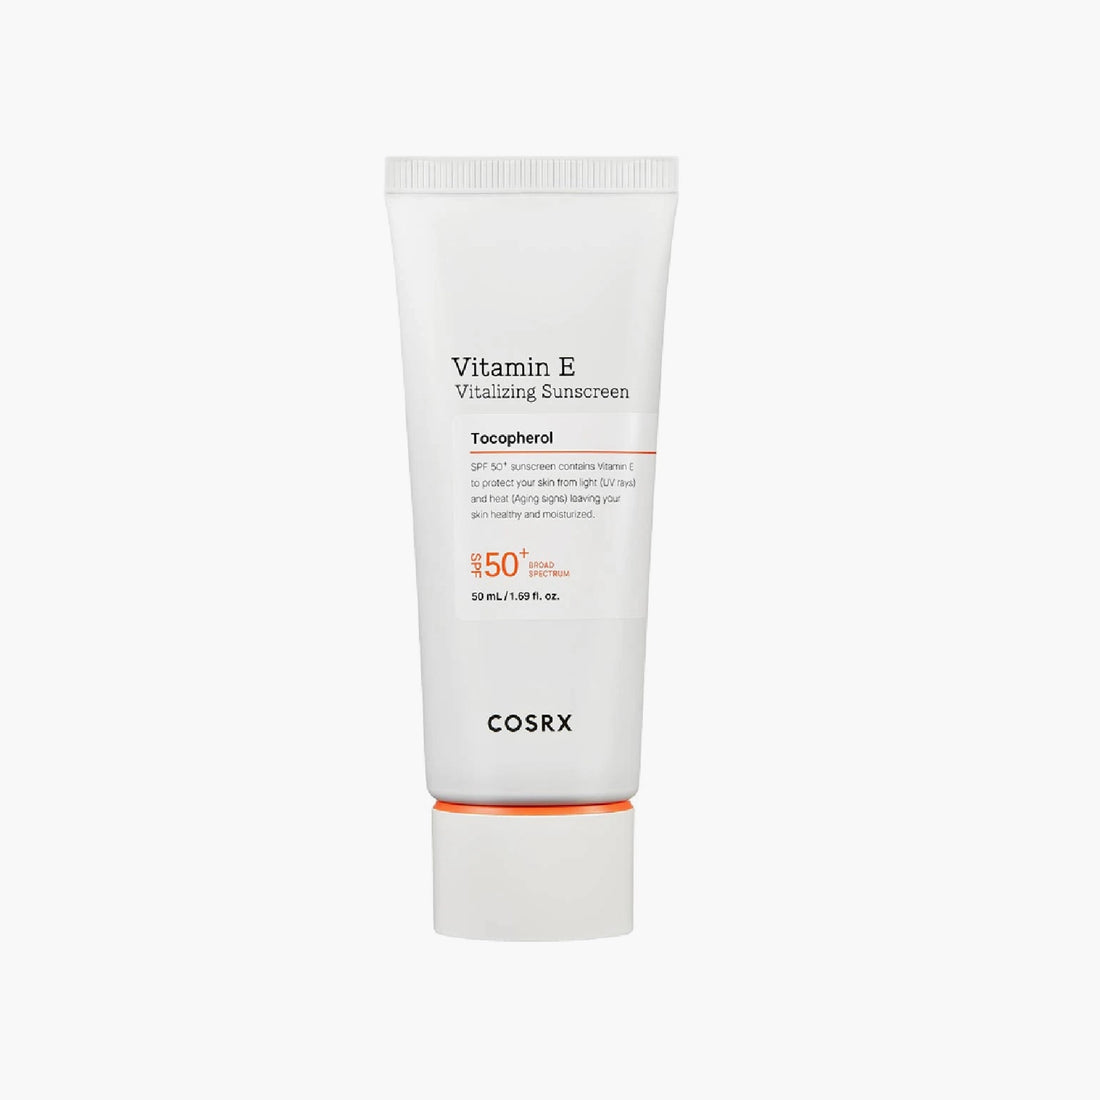 COSRX Vitamin E Vitalizing Sunscreen Tocopherol